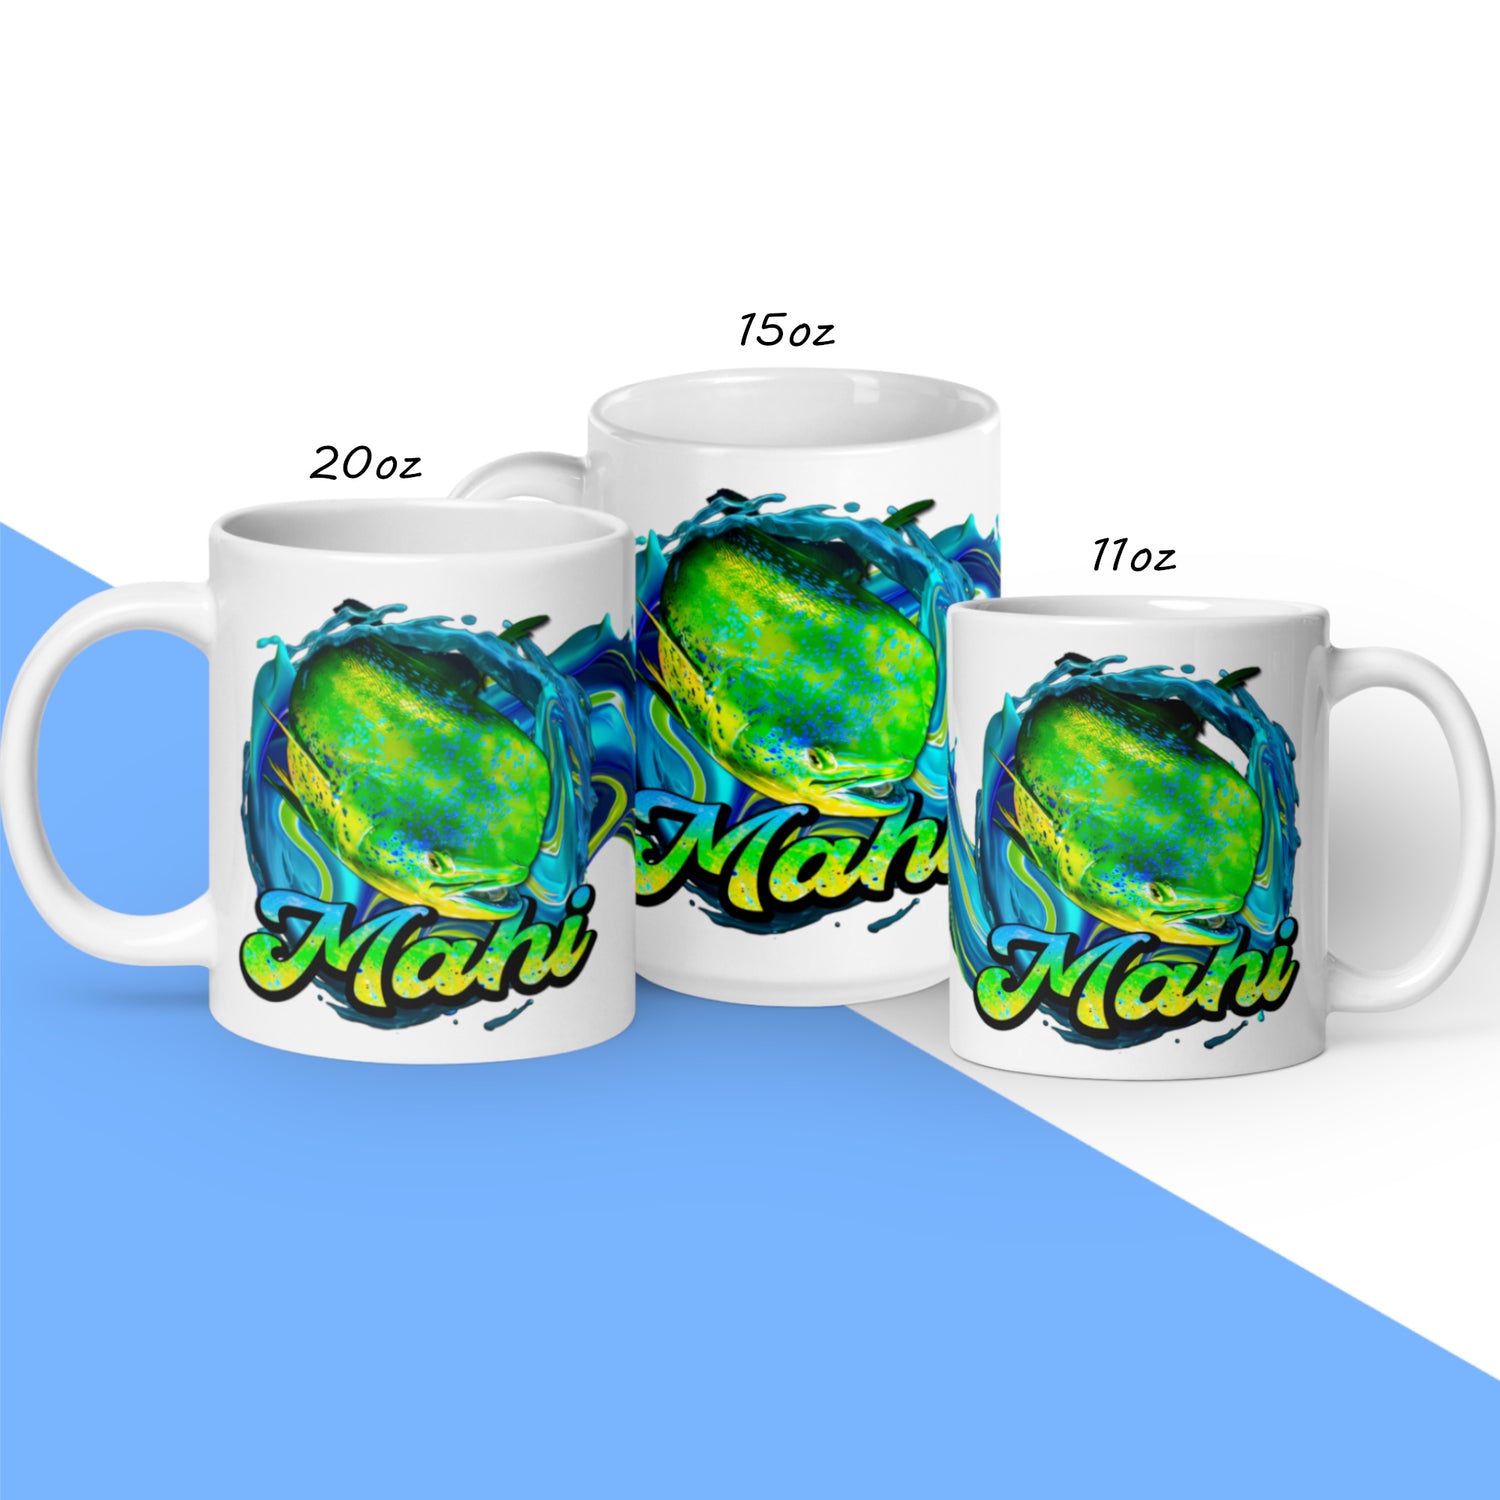 Coffee Mug For Fisherman Ceramic Cup with Mahi Mahi Fishing Design by Arczeal Designs